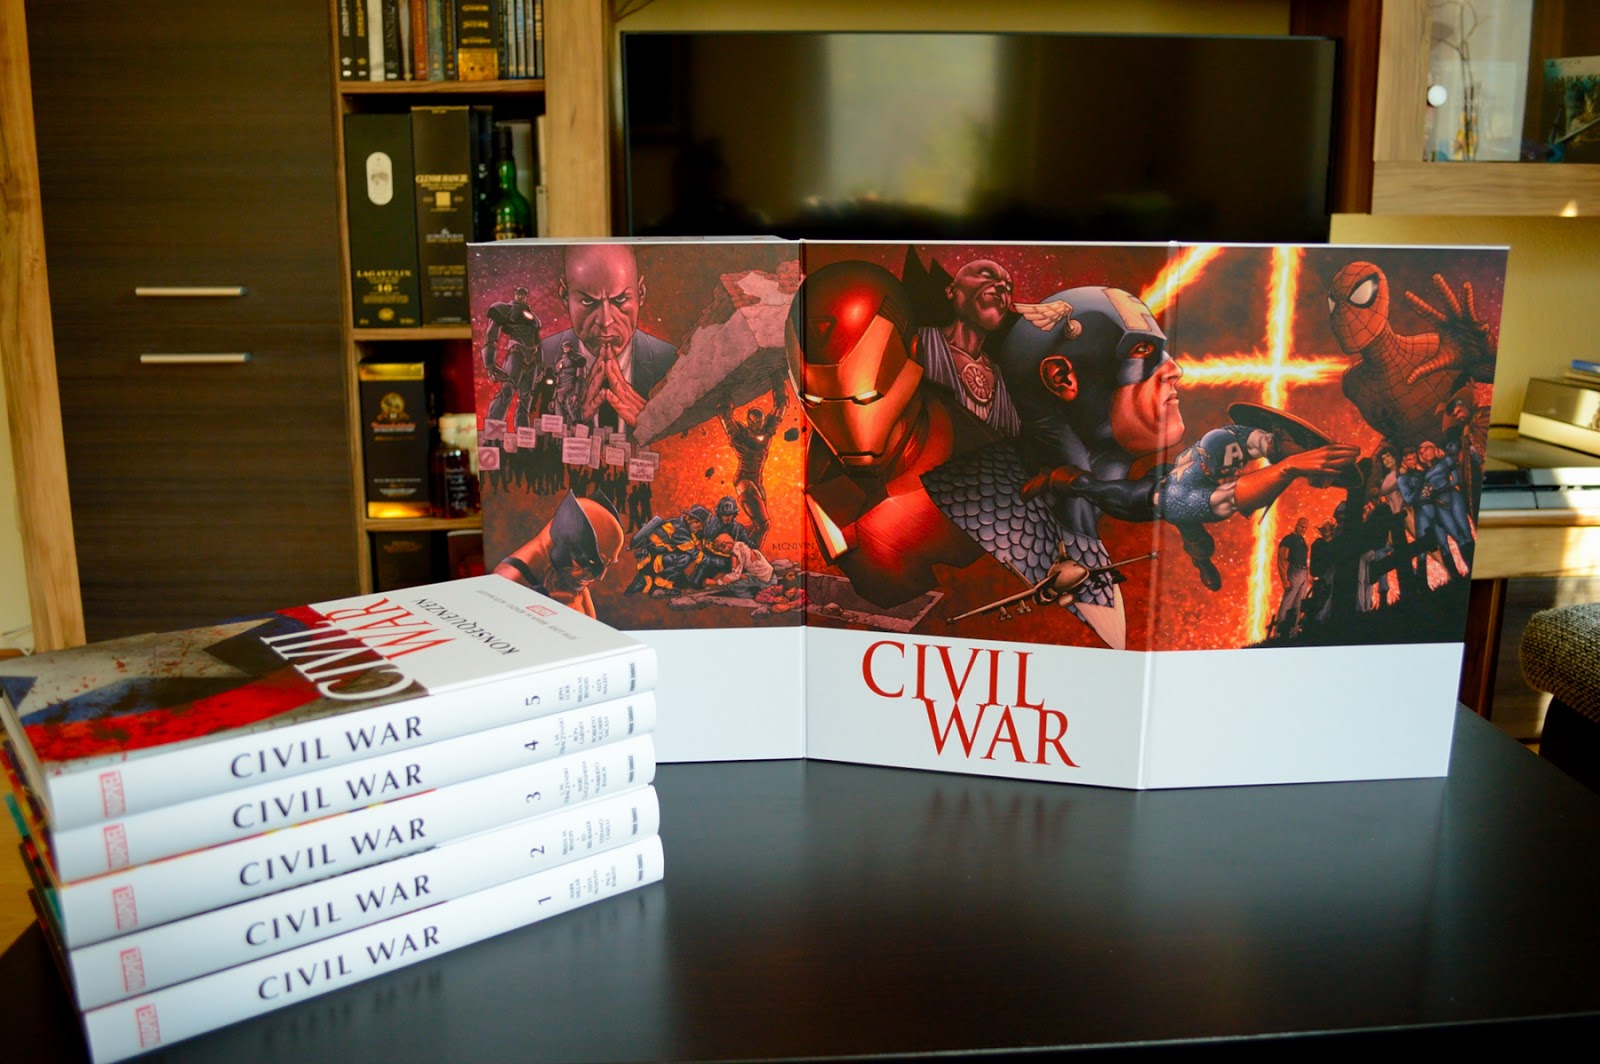 CIVIL WAR Deluxe Edition OMNIBUS 5 Hardcover im Schuber limitiert deutsch